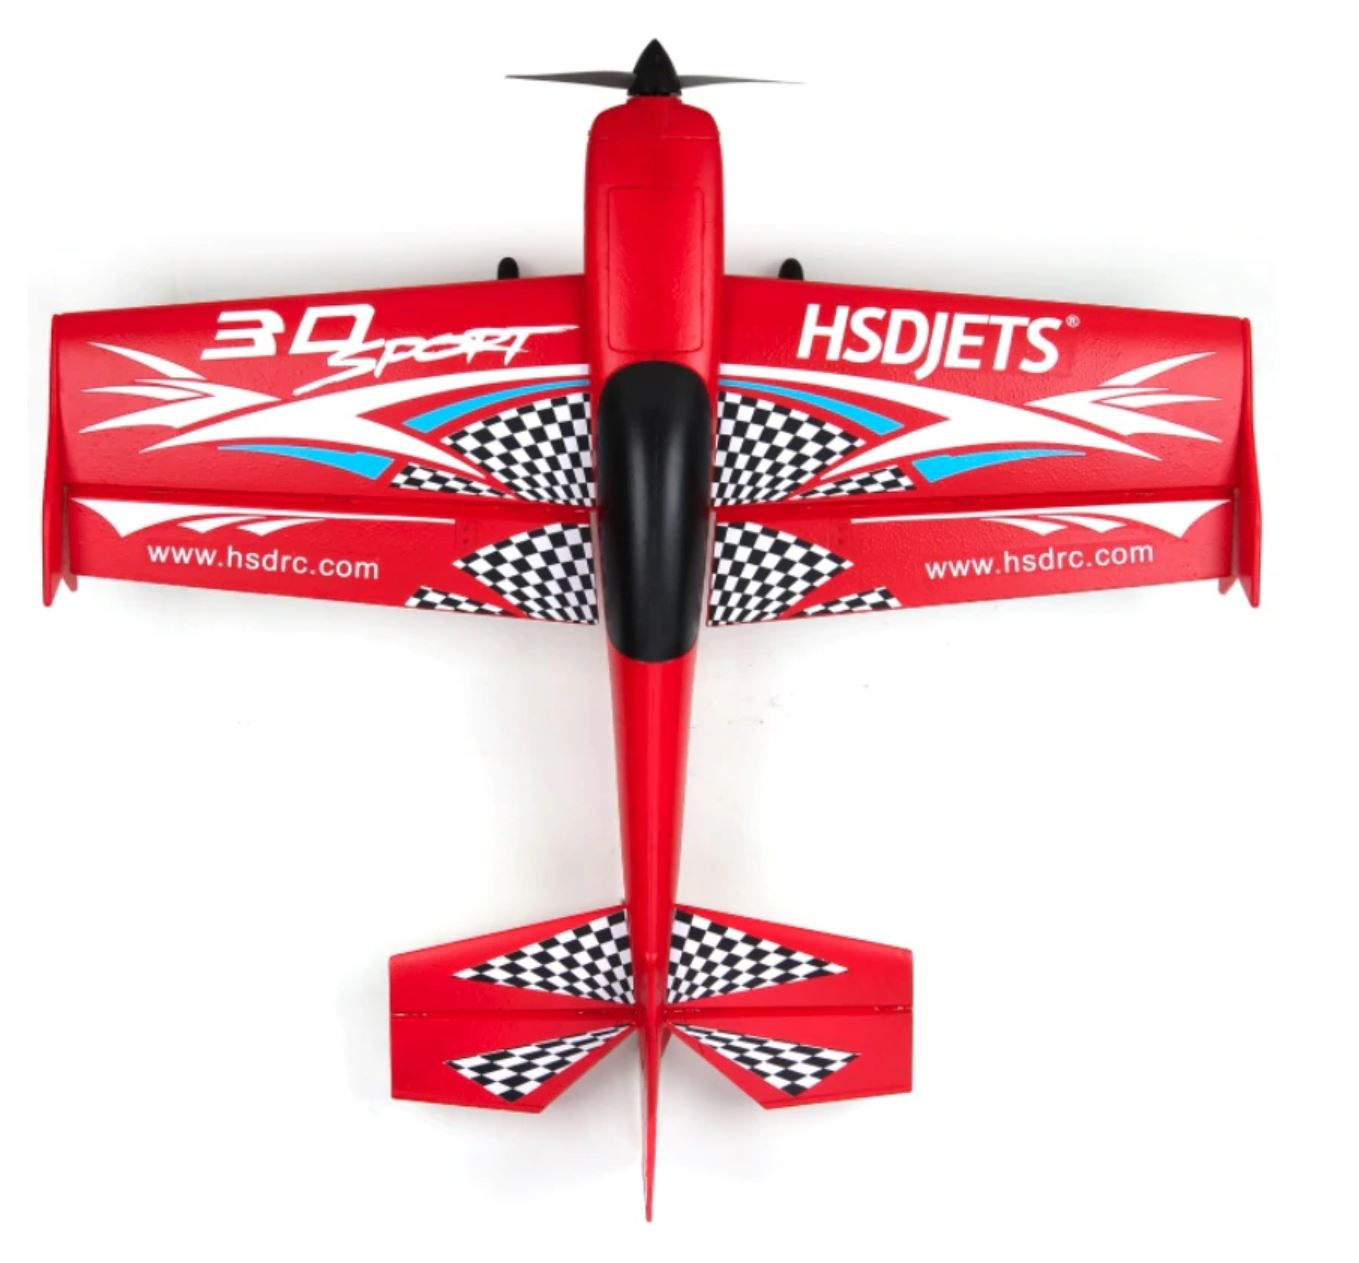 D400 3D Sport HSDjets